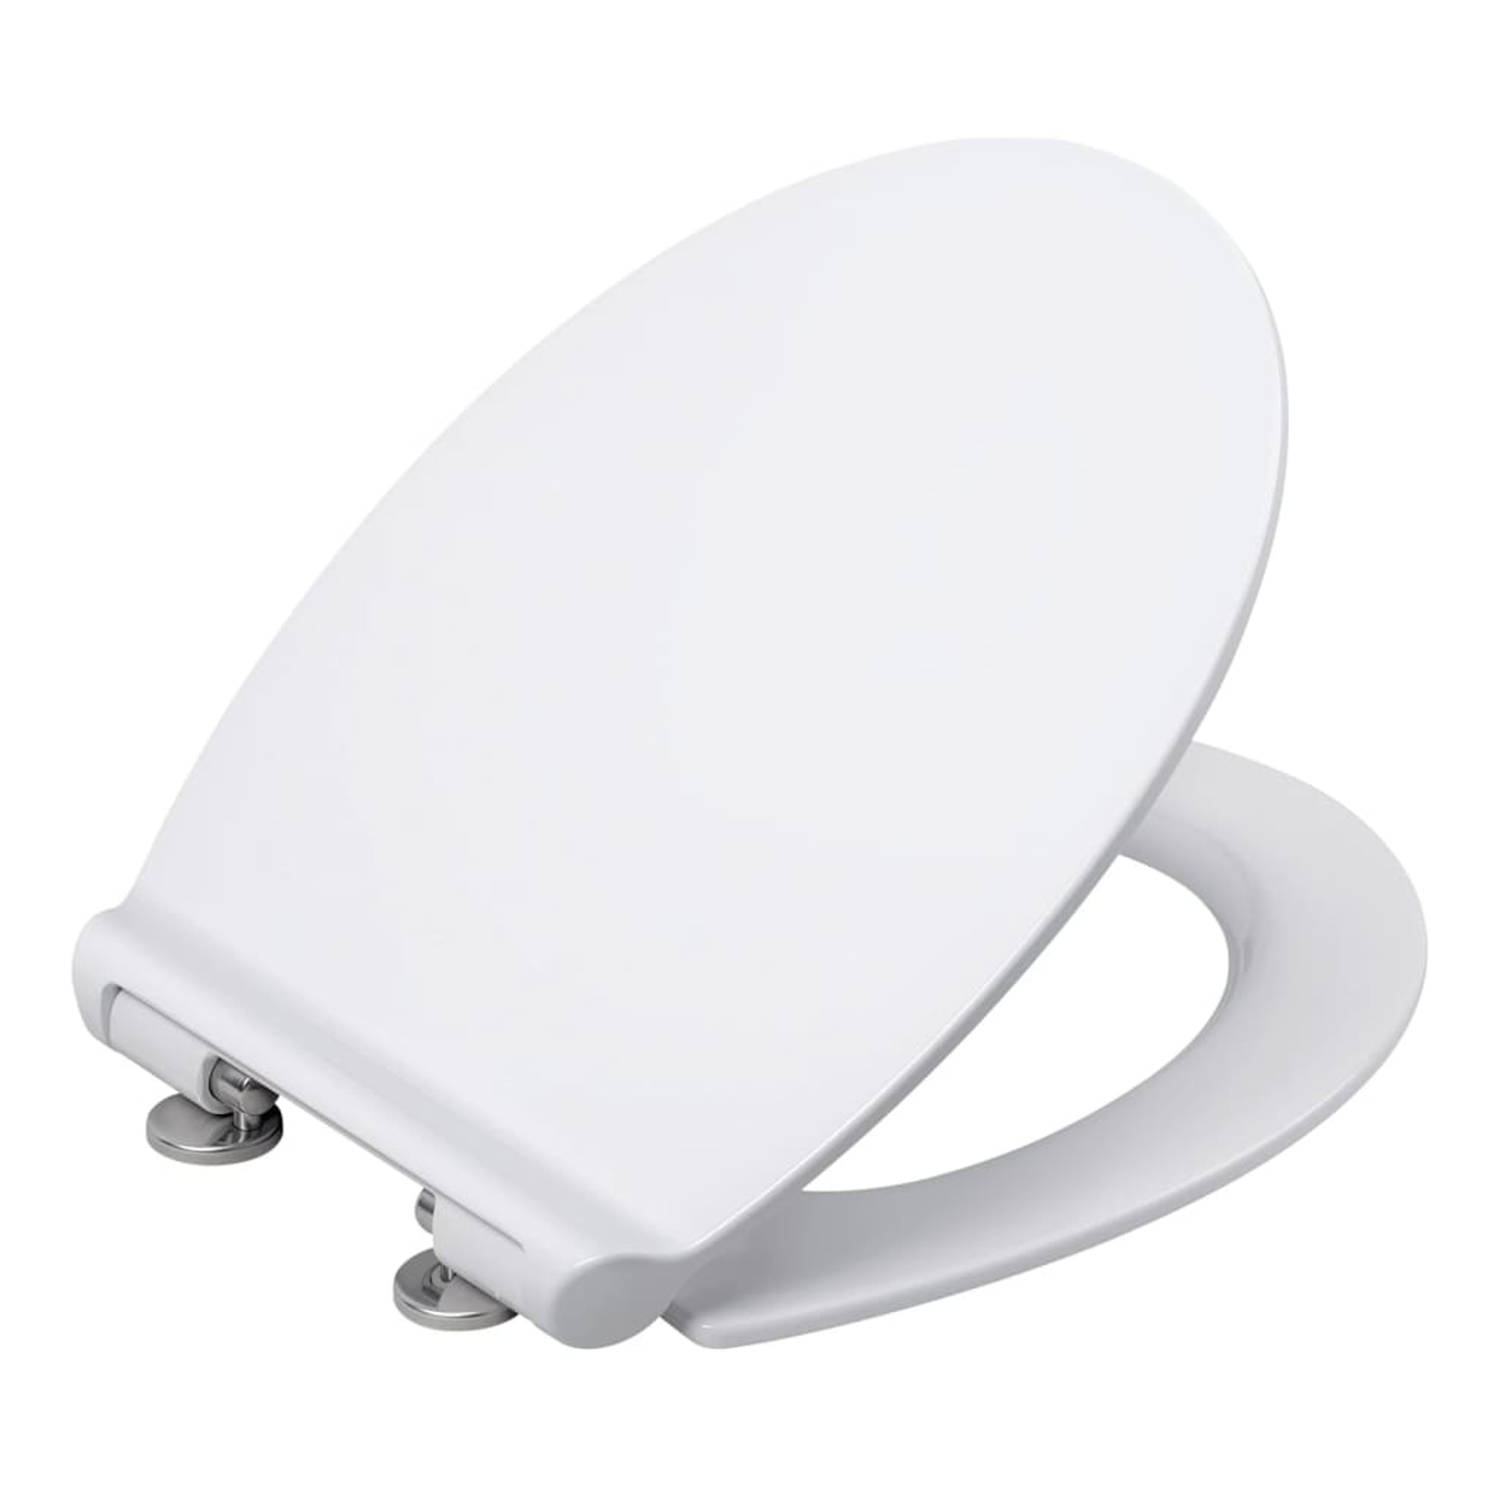 span Situatie pariteit CORNAT Toiletbril met soft-close PREMIUM 3 duroplast wit | Blokker